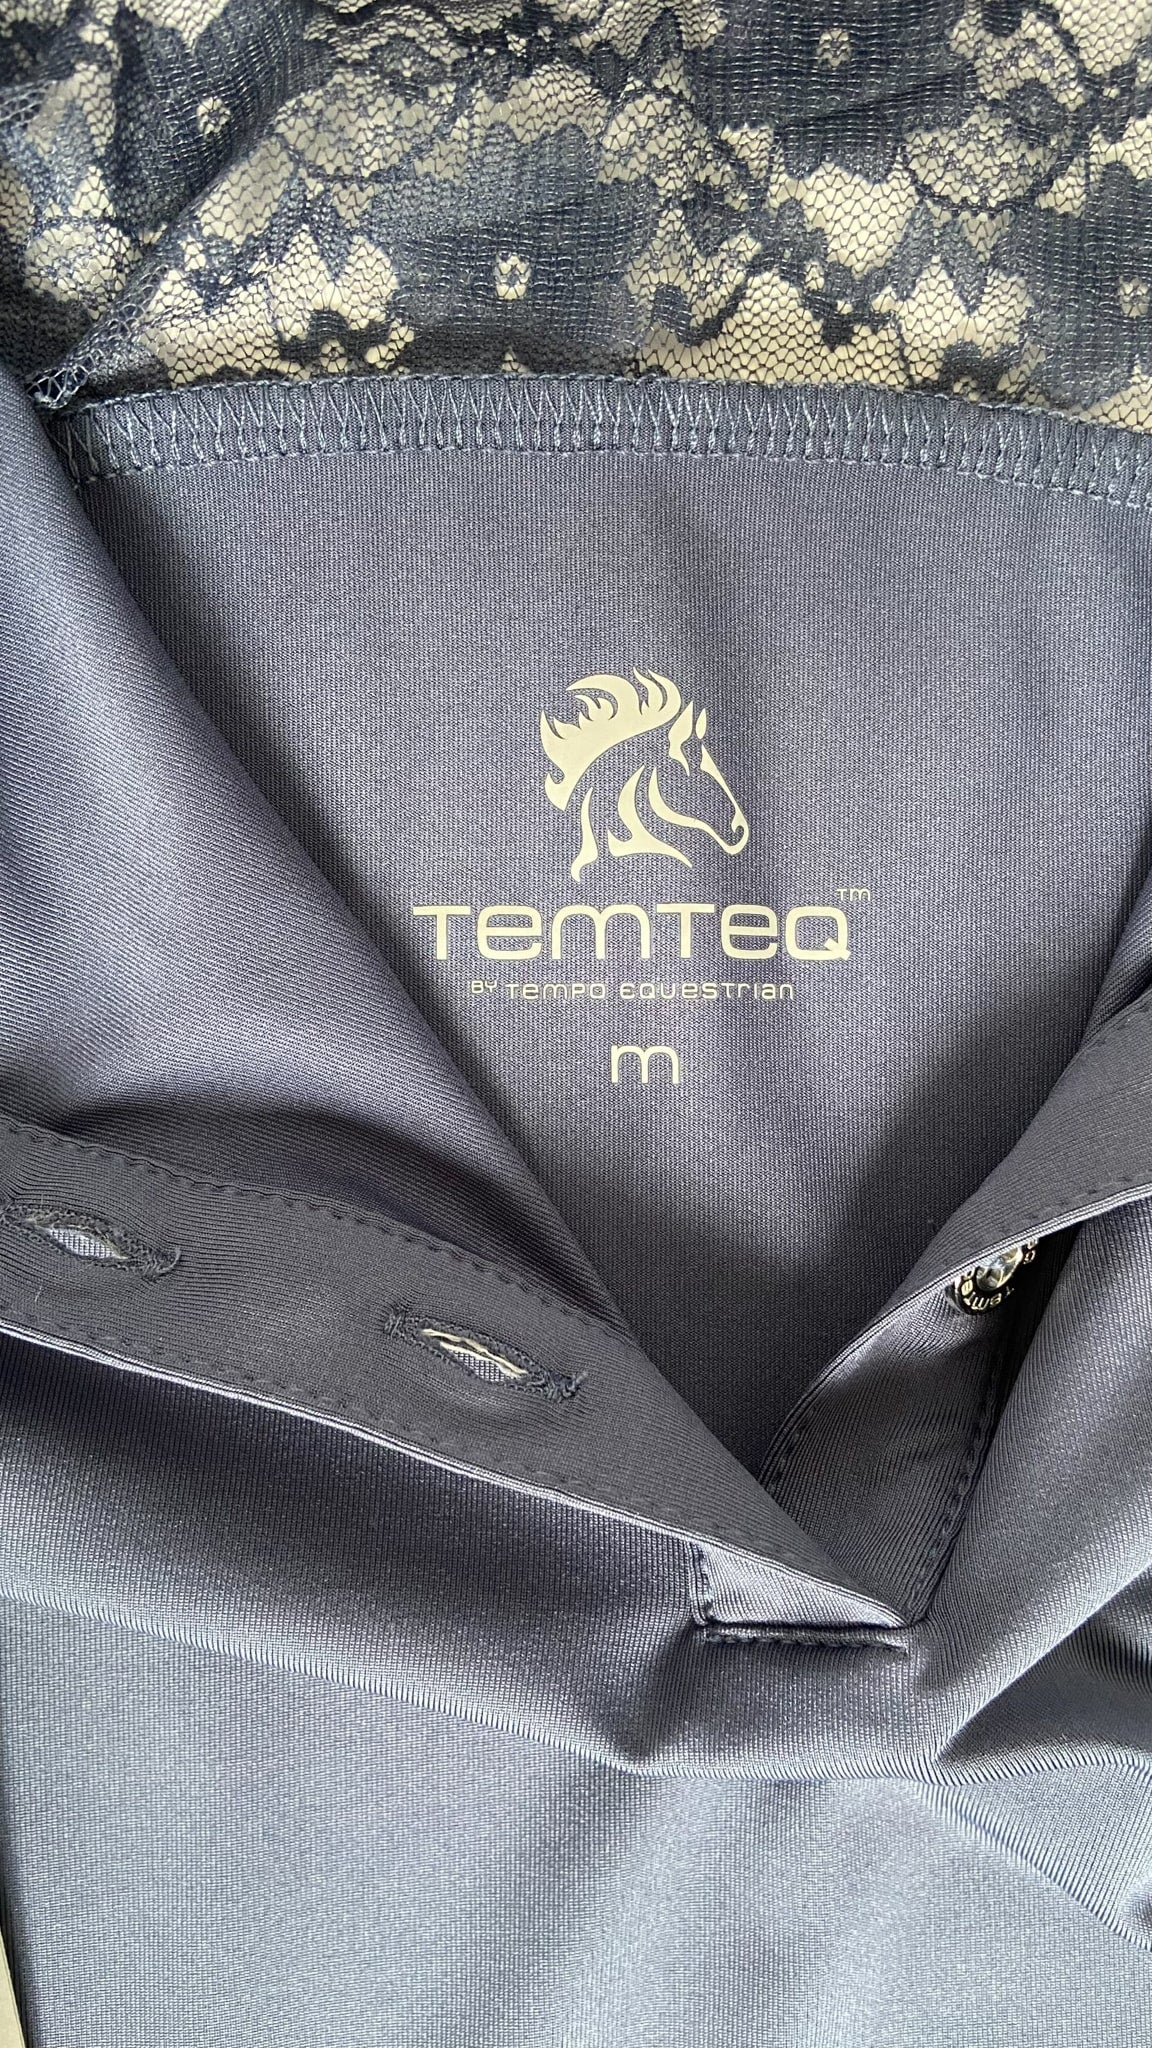 Tempo Equestrian Coco Functional Lace Trim Shirt - Blue - Women's Medium